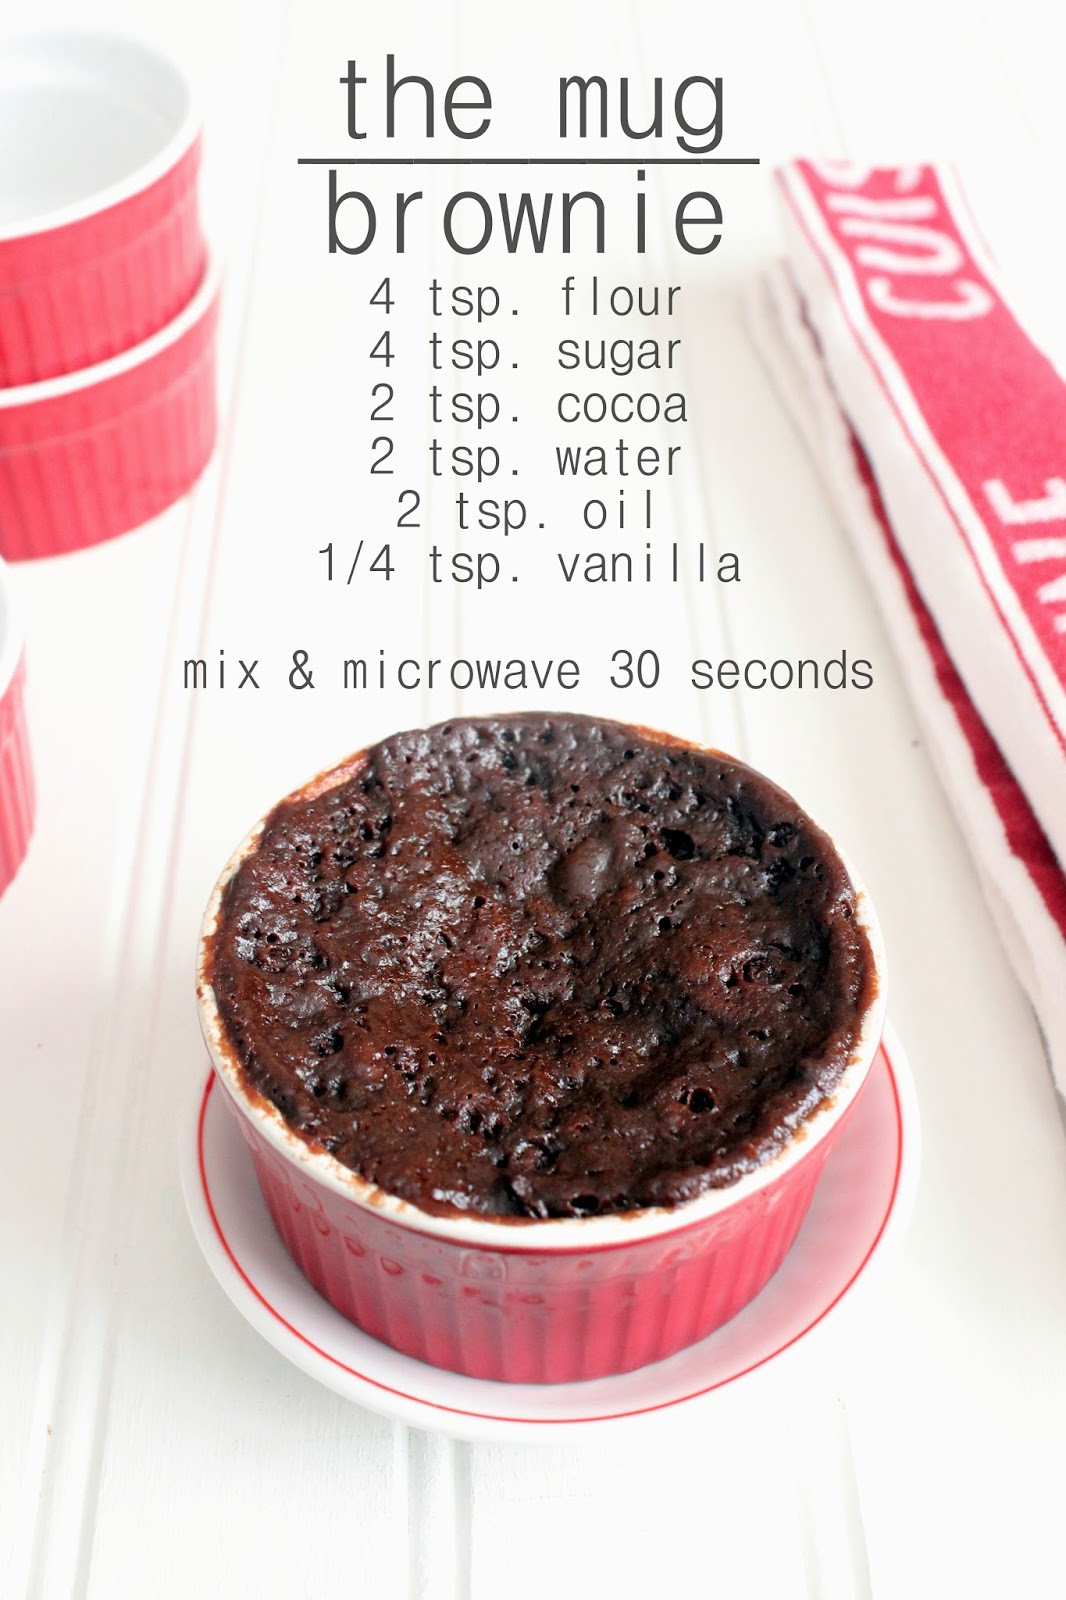 Microwave Mug Cake Recipes
 Cherry Tea Cakes The "Mug" Brownie